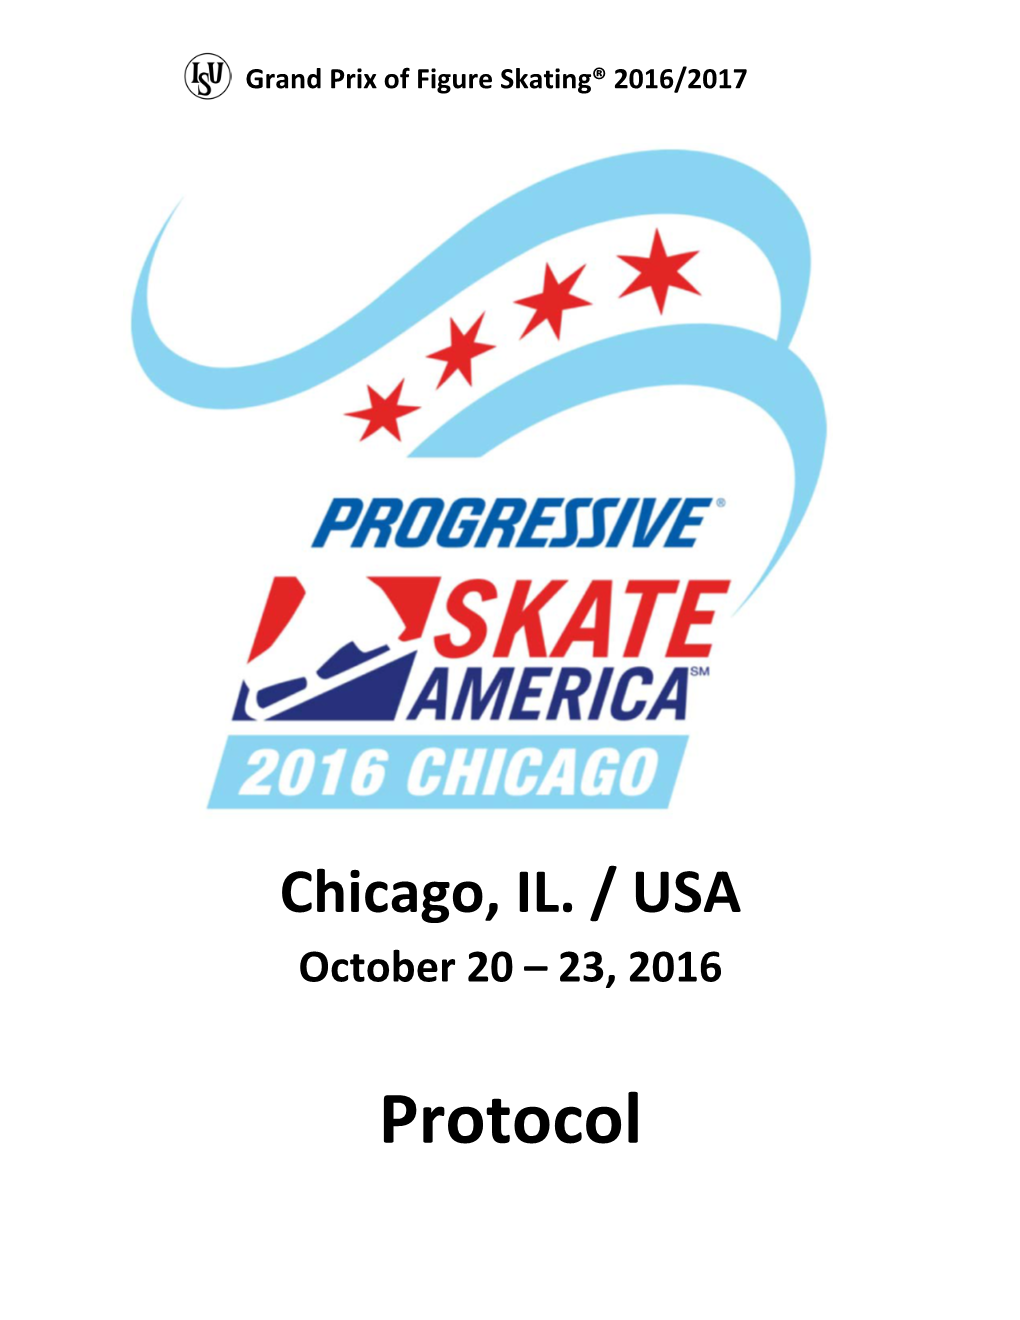 Protocol Grand Prix of Figure Skating® 2016/17 2016 Progressive Skate America, Chicago Il., USA